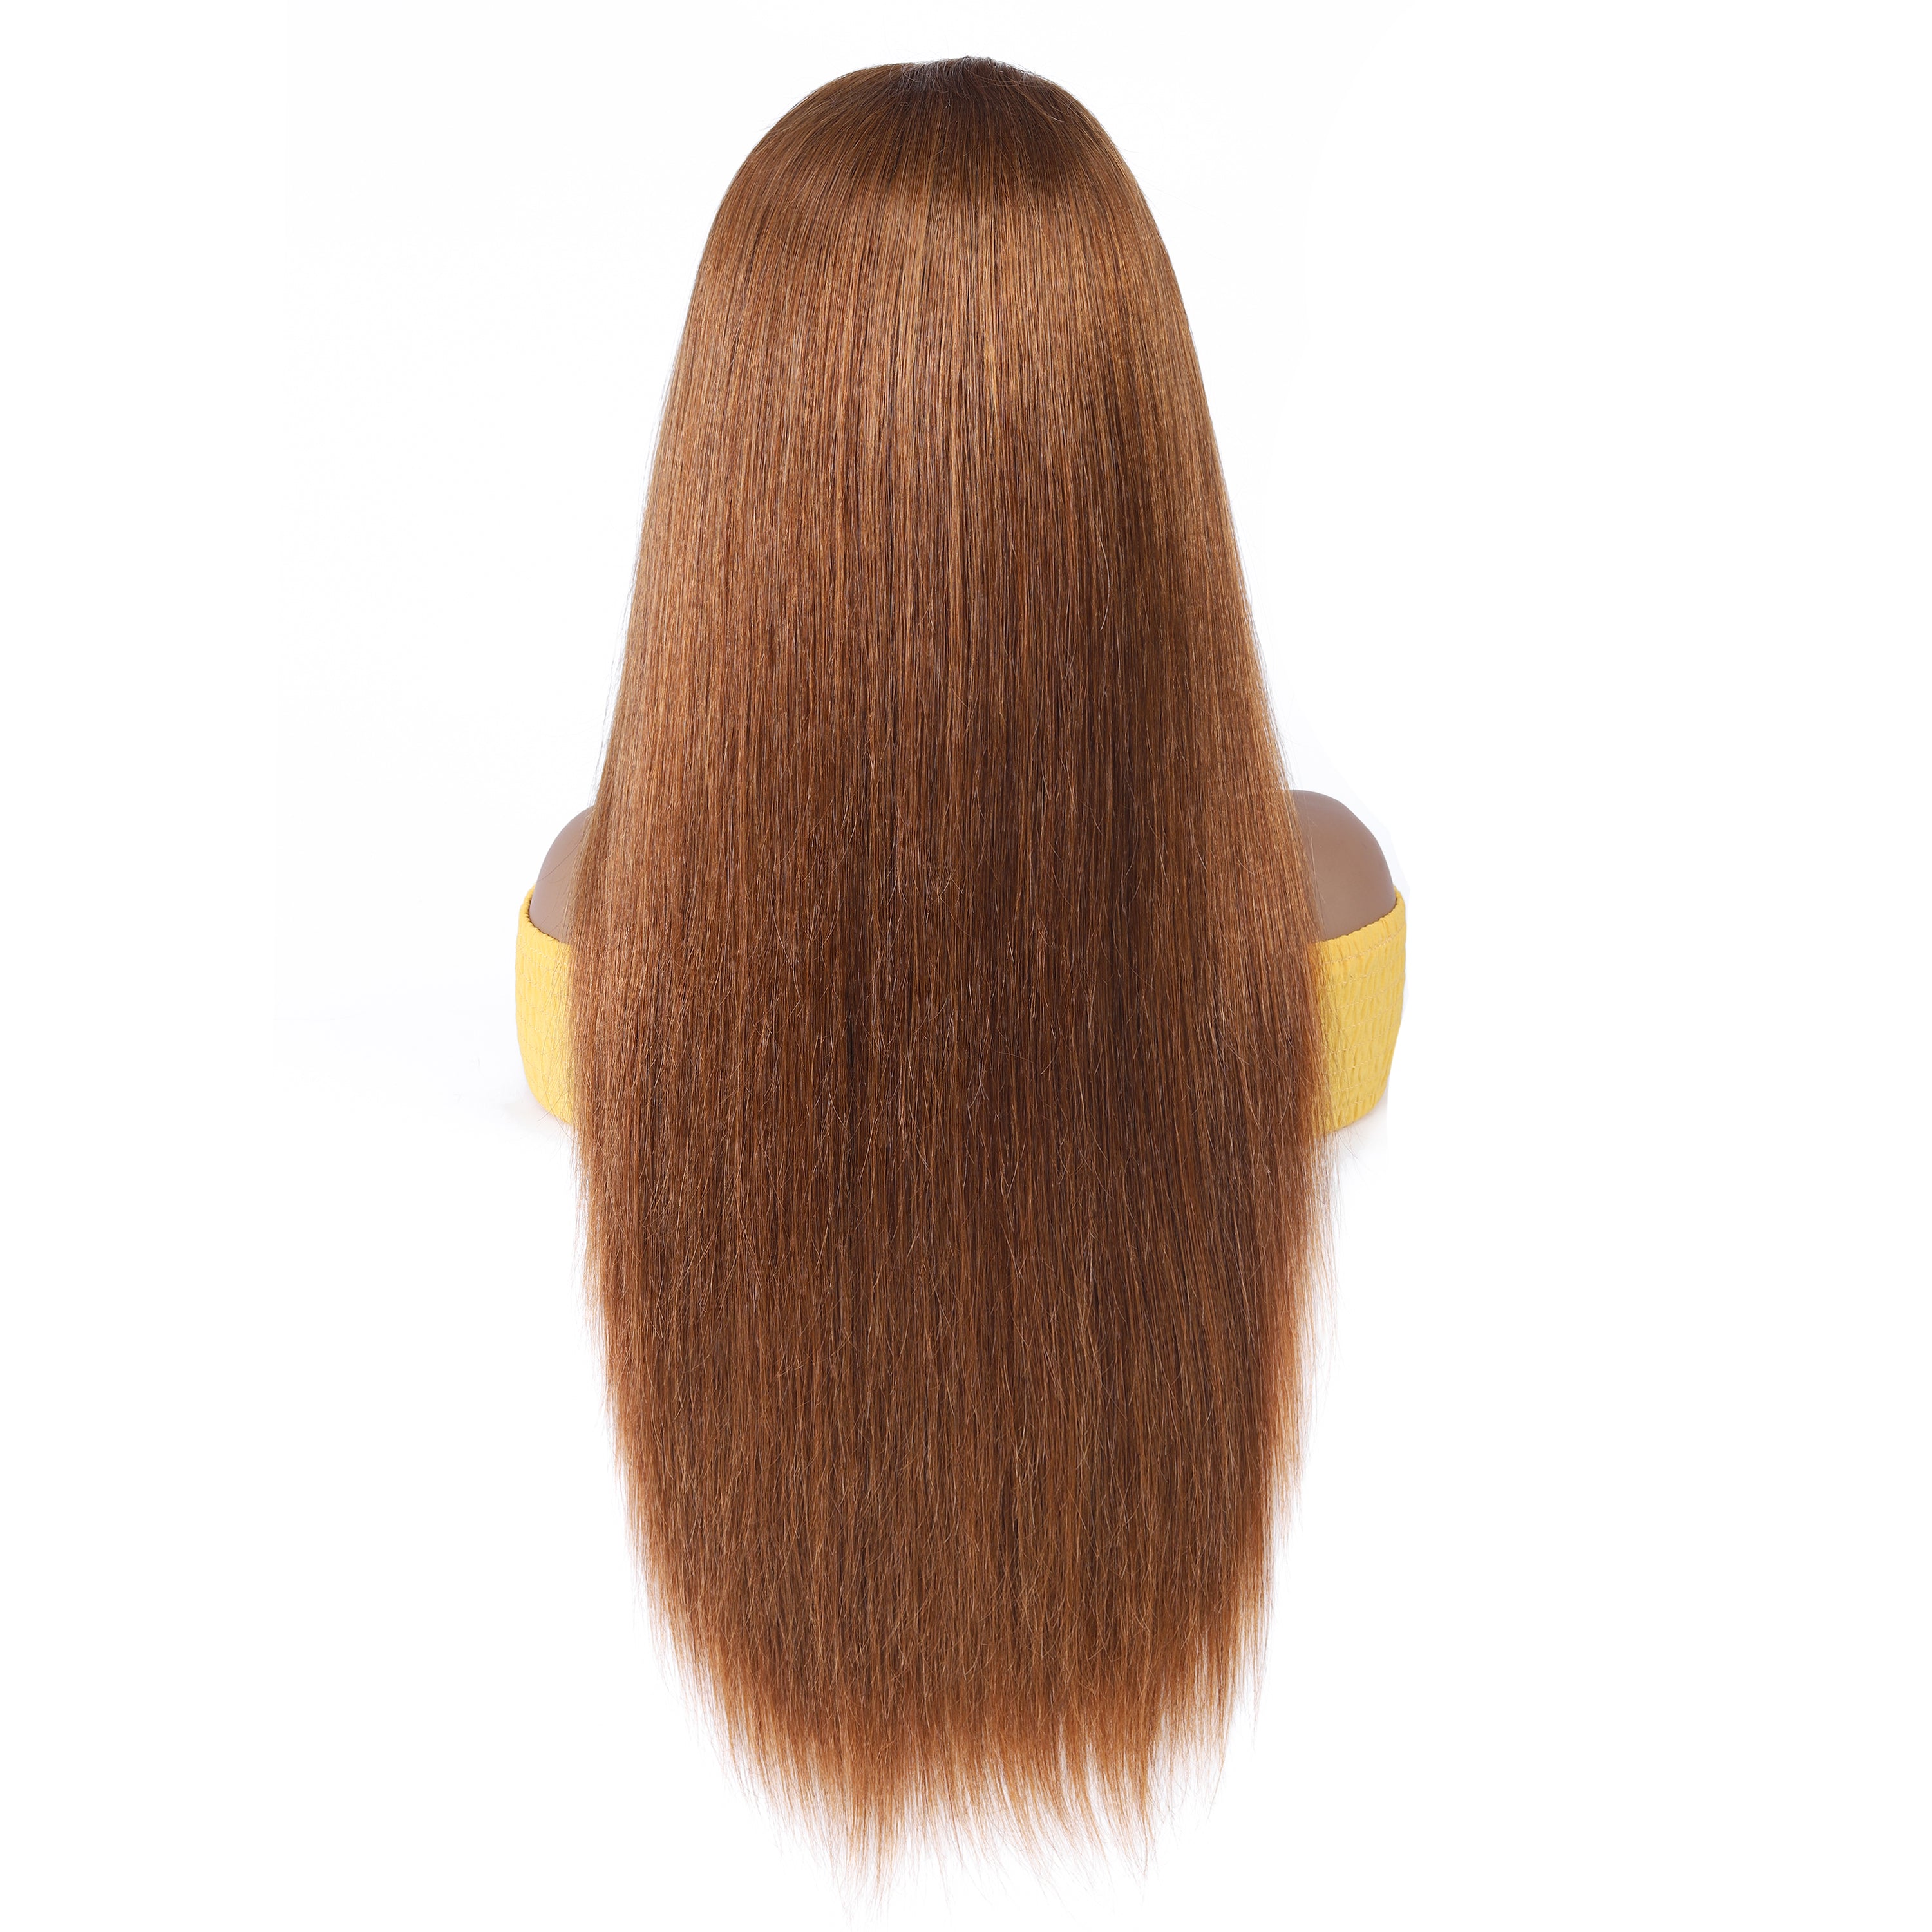 Ronashow Medium Auburn Color 30  Straight 13*4 Lace Frontal Wig